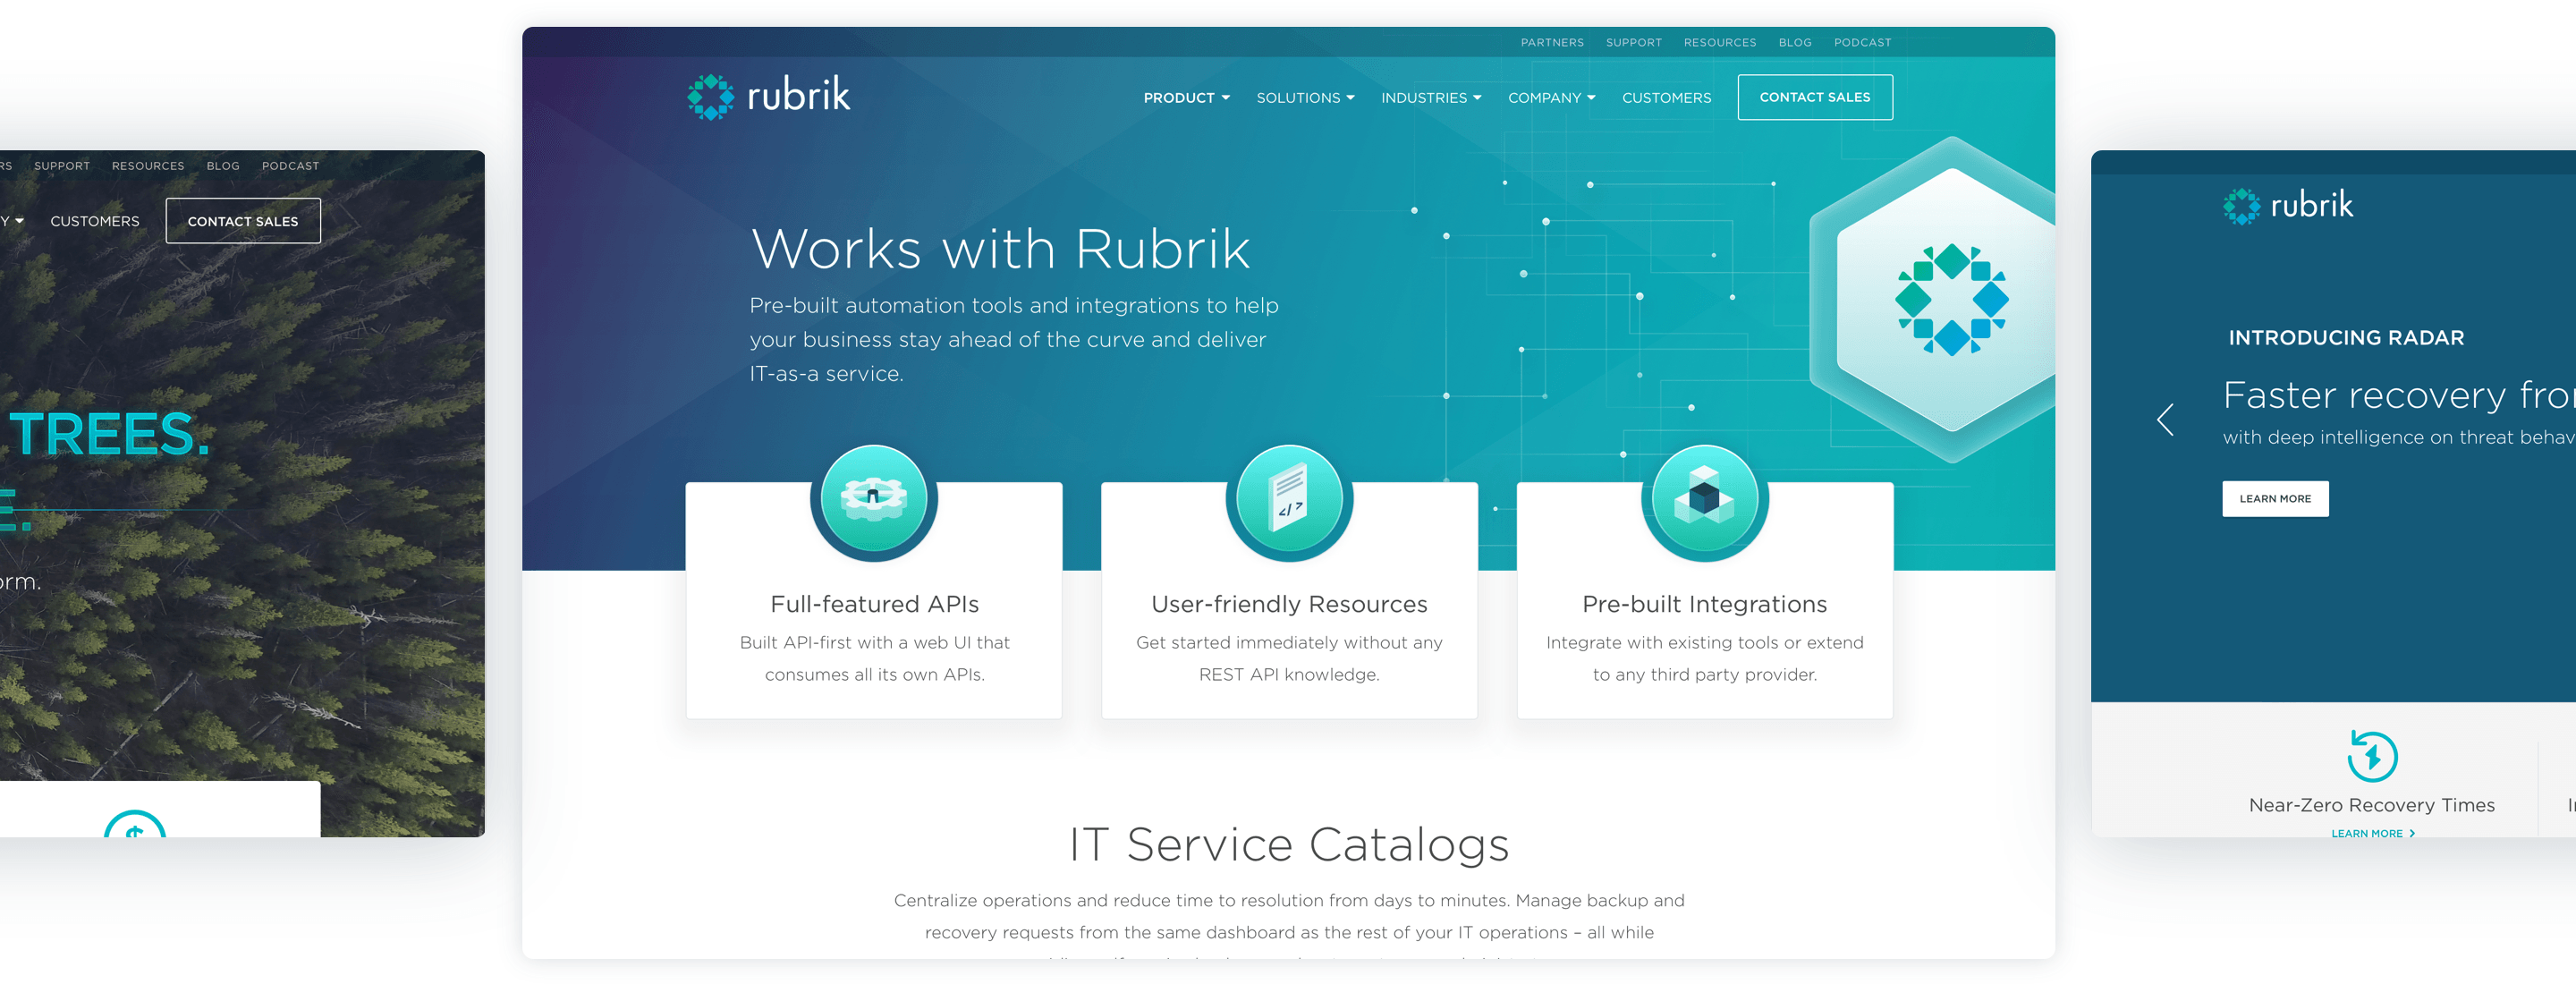 Rubrik Logo - Rubrik • Corporate Website design | by Pixelmatters